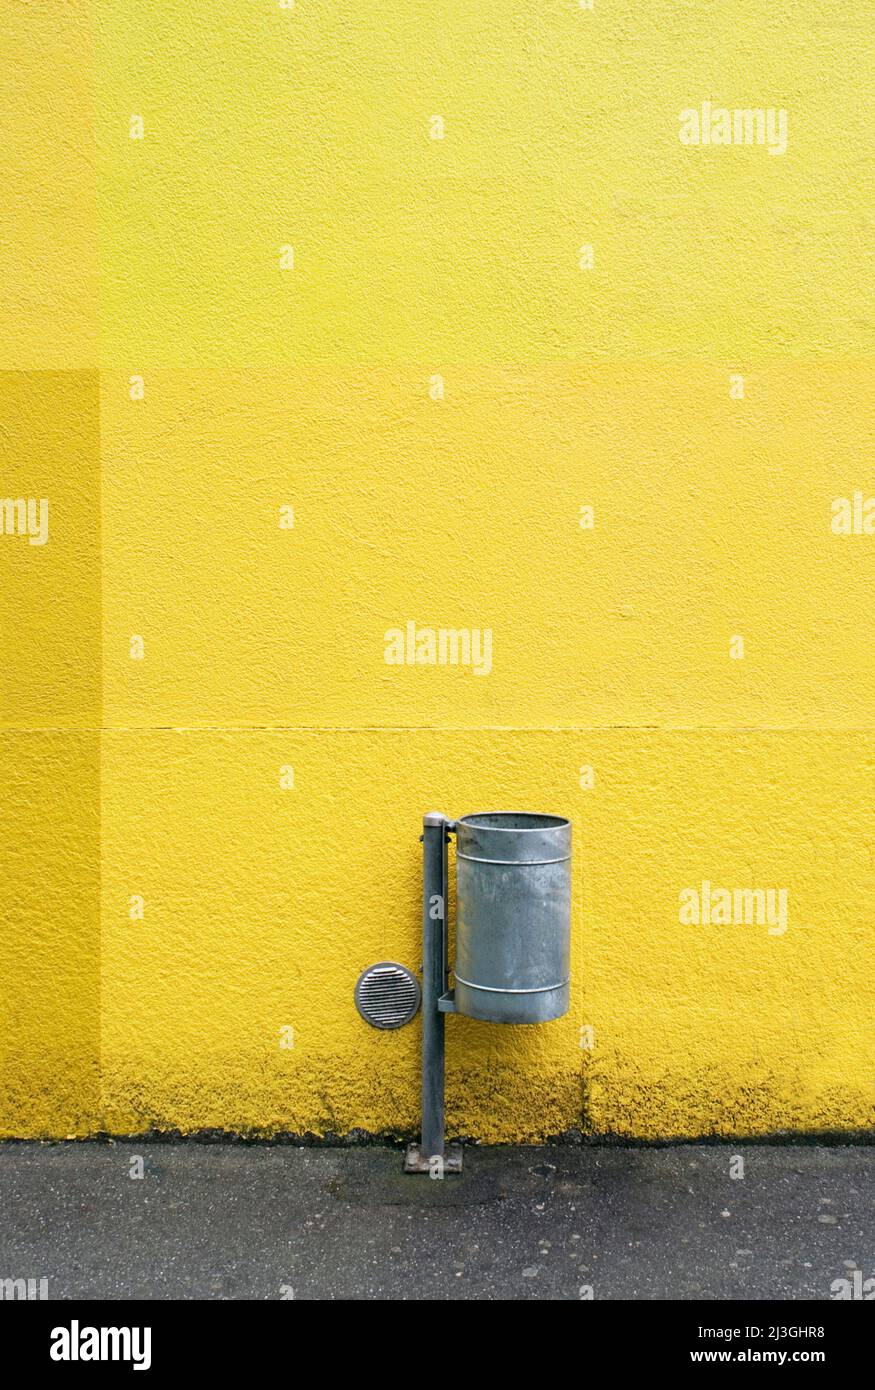 rubbish bin against yellow wall Stock Photo